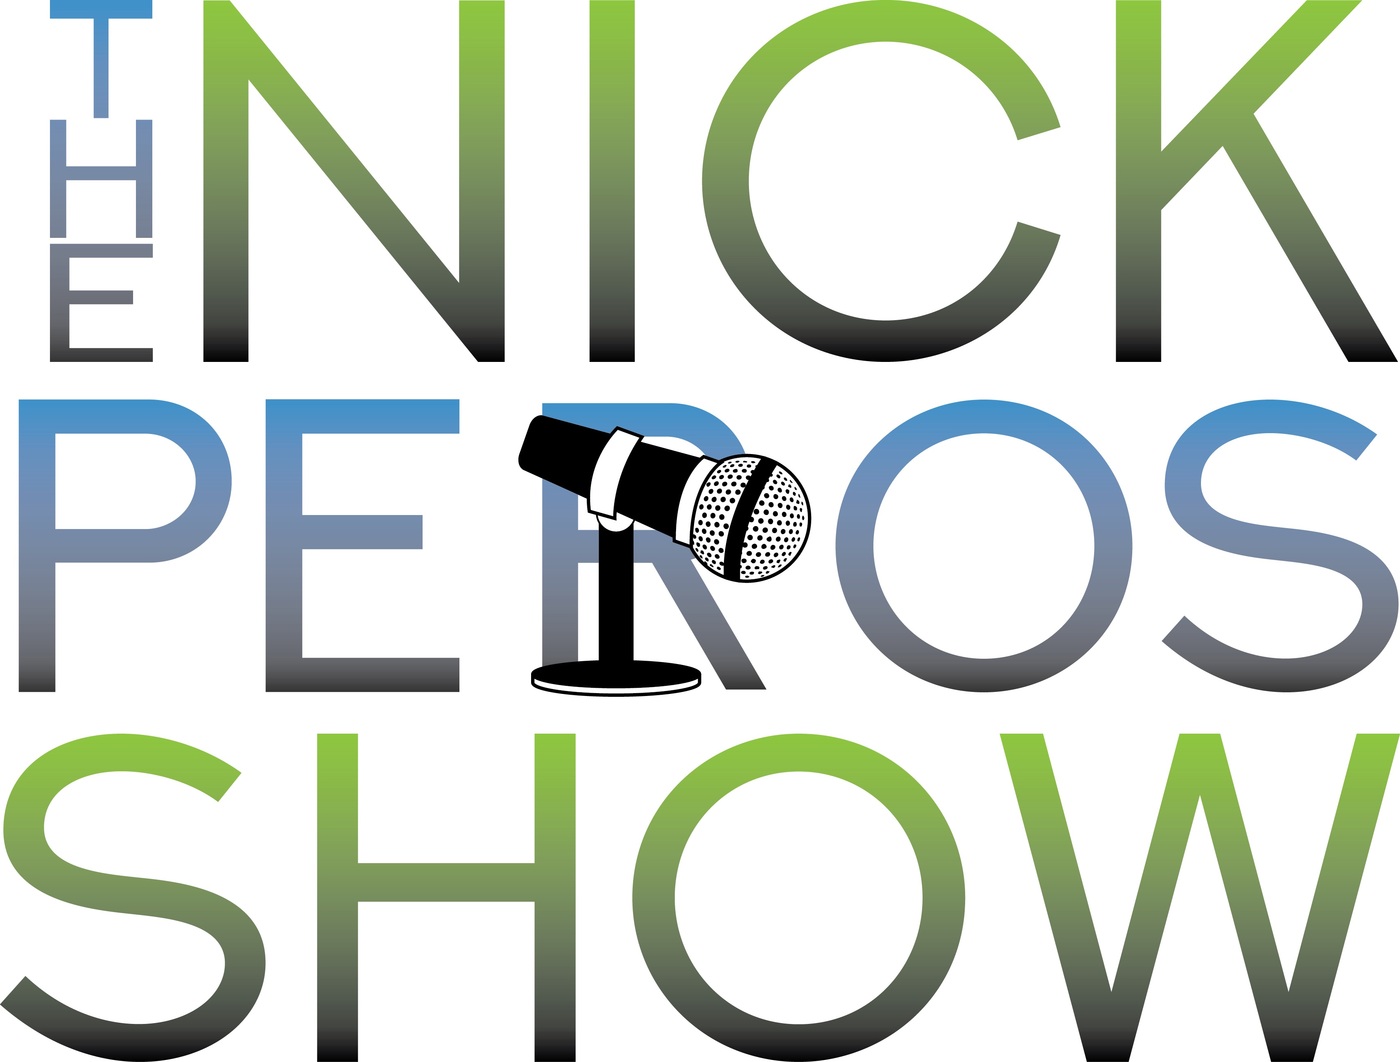 The Nick Peros Show